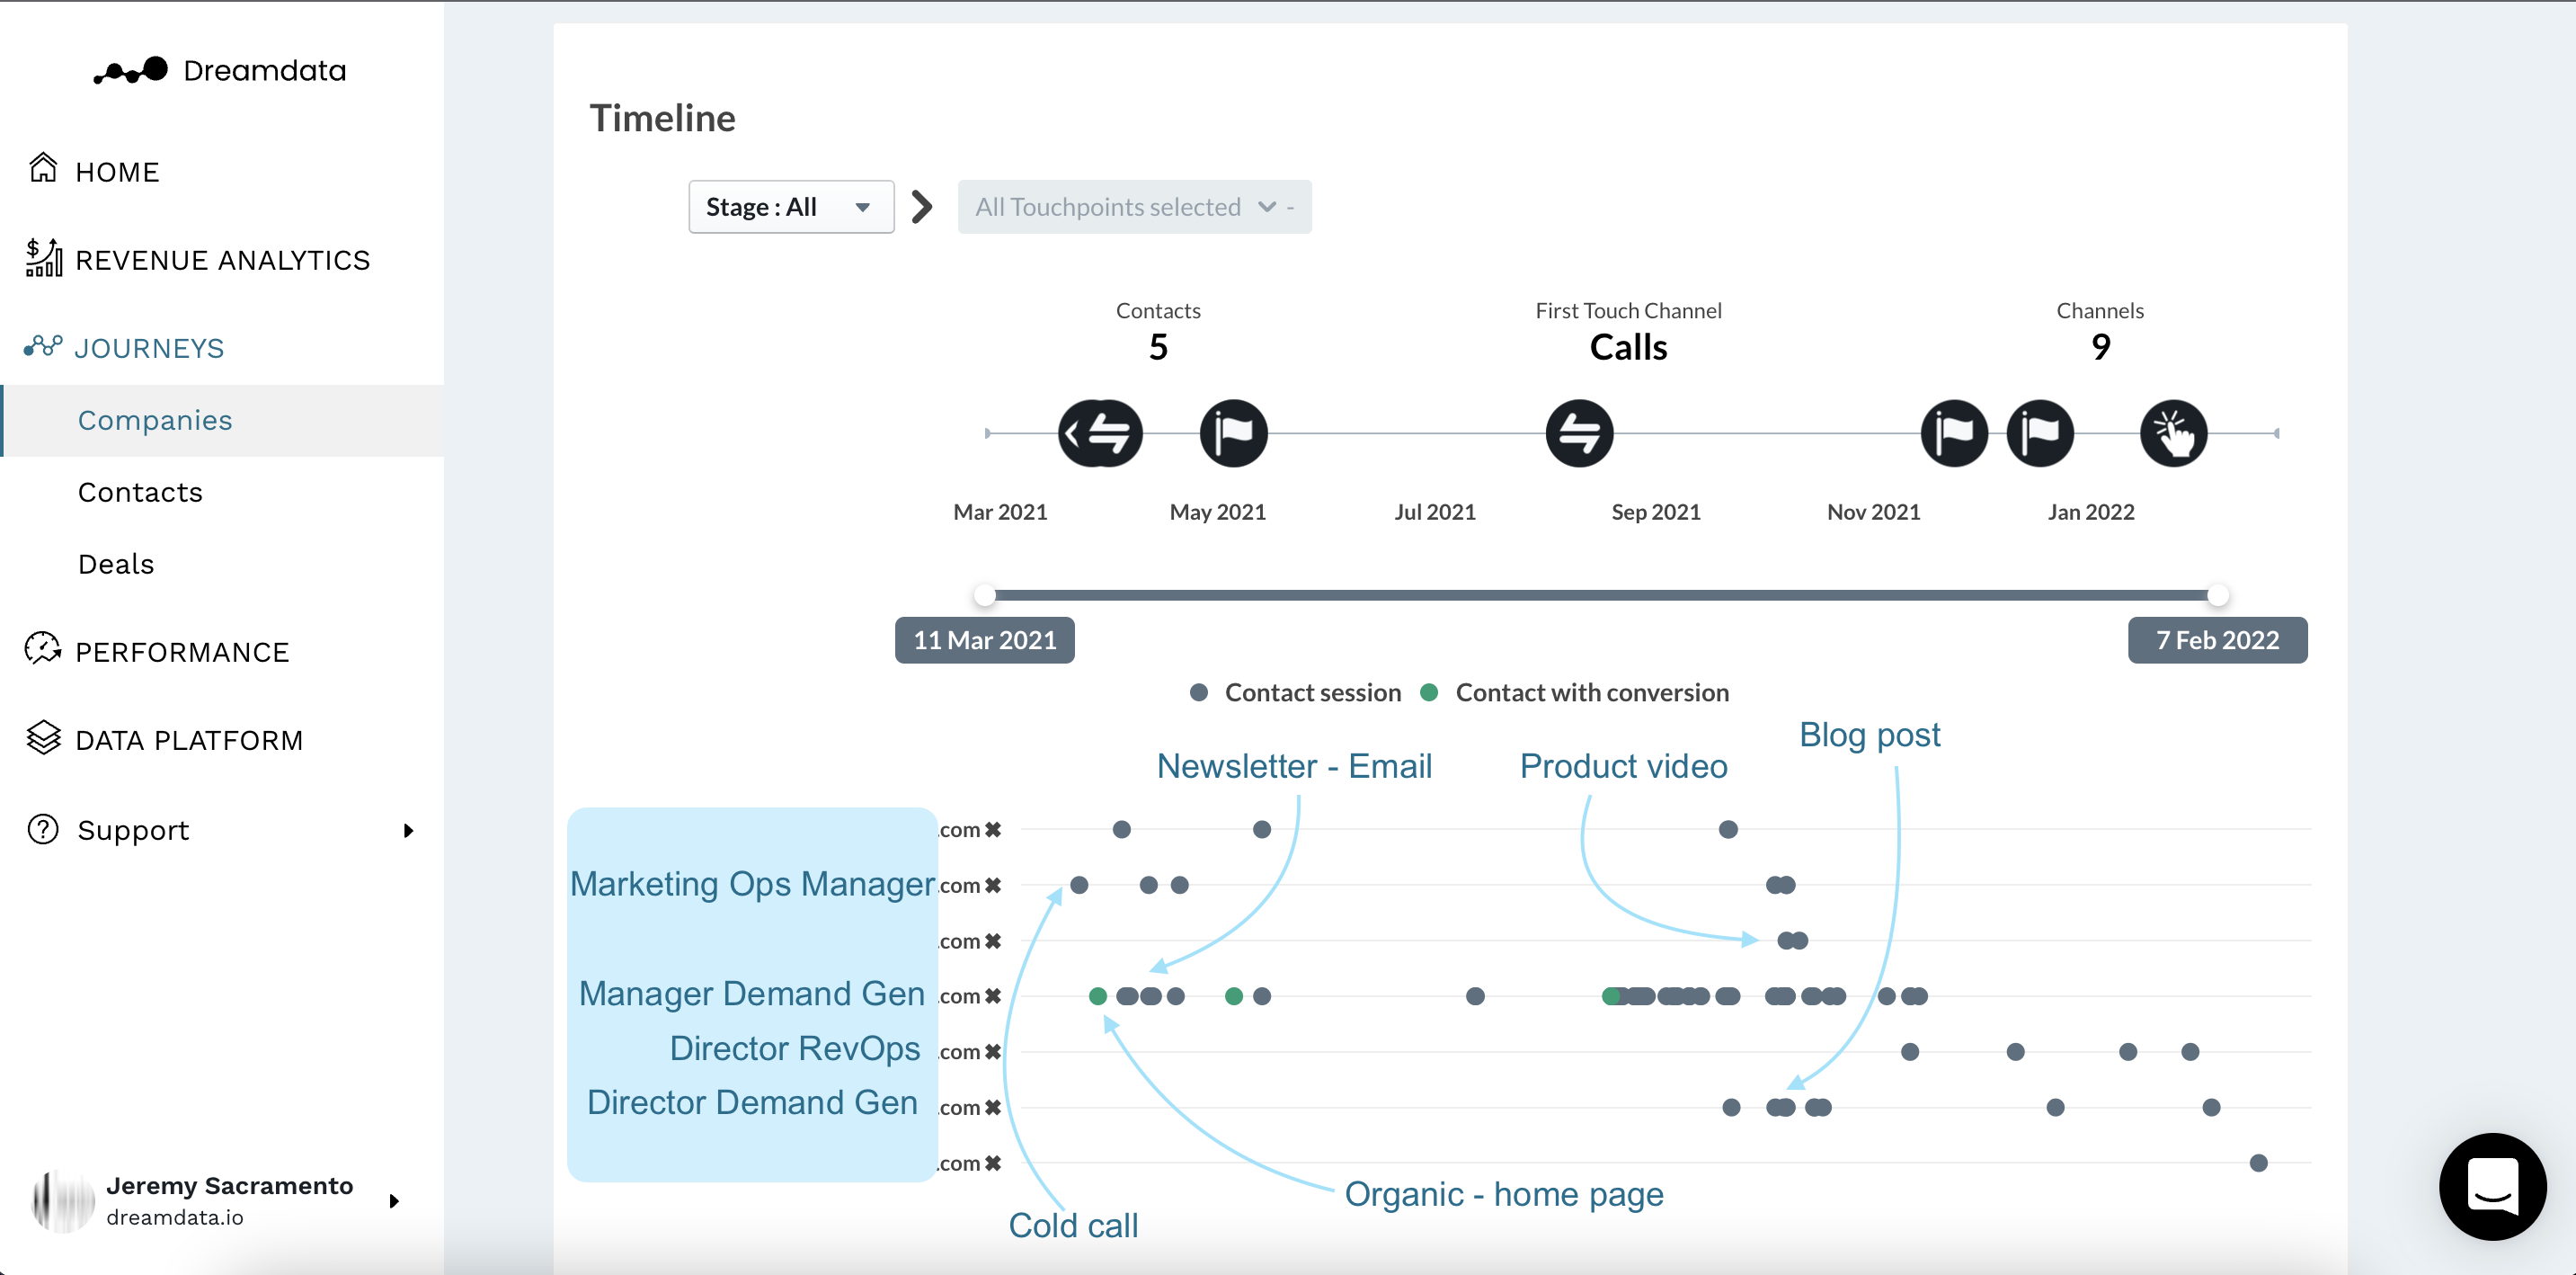 Customer journey feature shown in marketing attribution tool Dreamdata